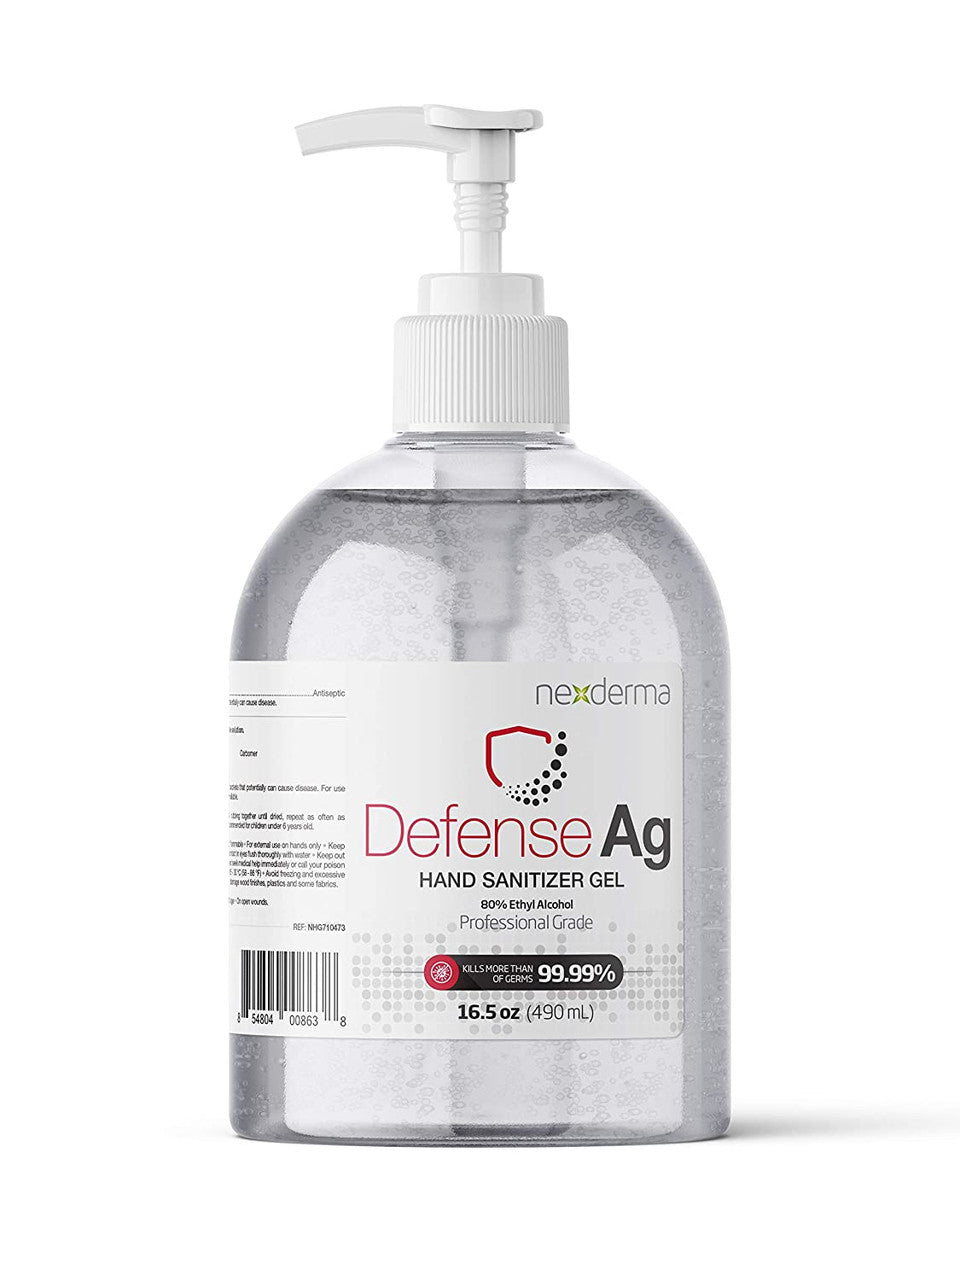 NEXDERMA Defense Ag Hand Disinfectant Gel with 80% Ethyl Alcohol - 16.5oz